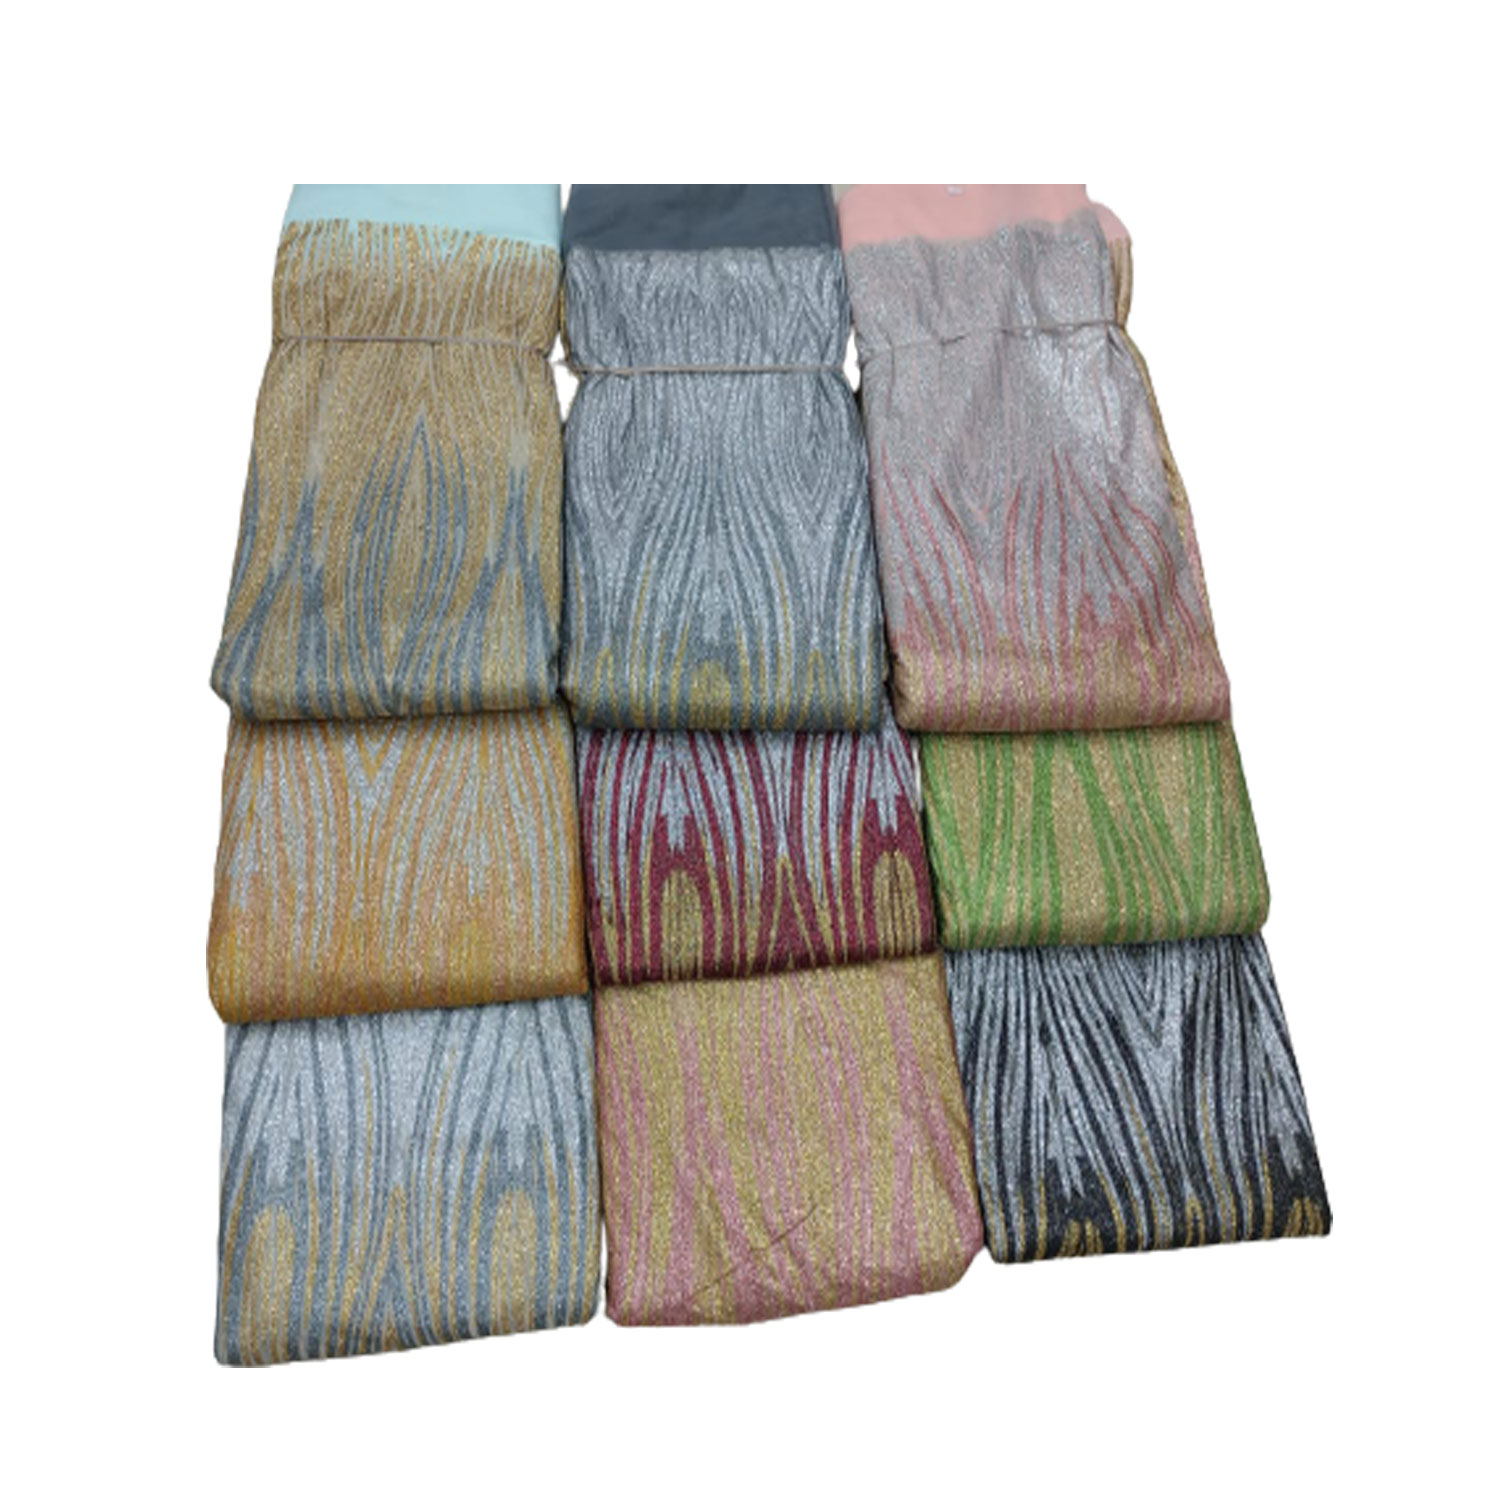 Bitsh net Fabric, Multi Color (10 Meter)